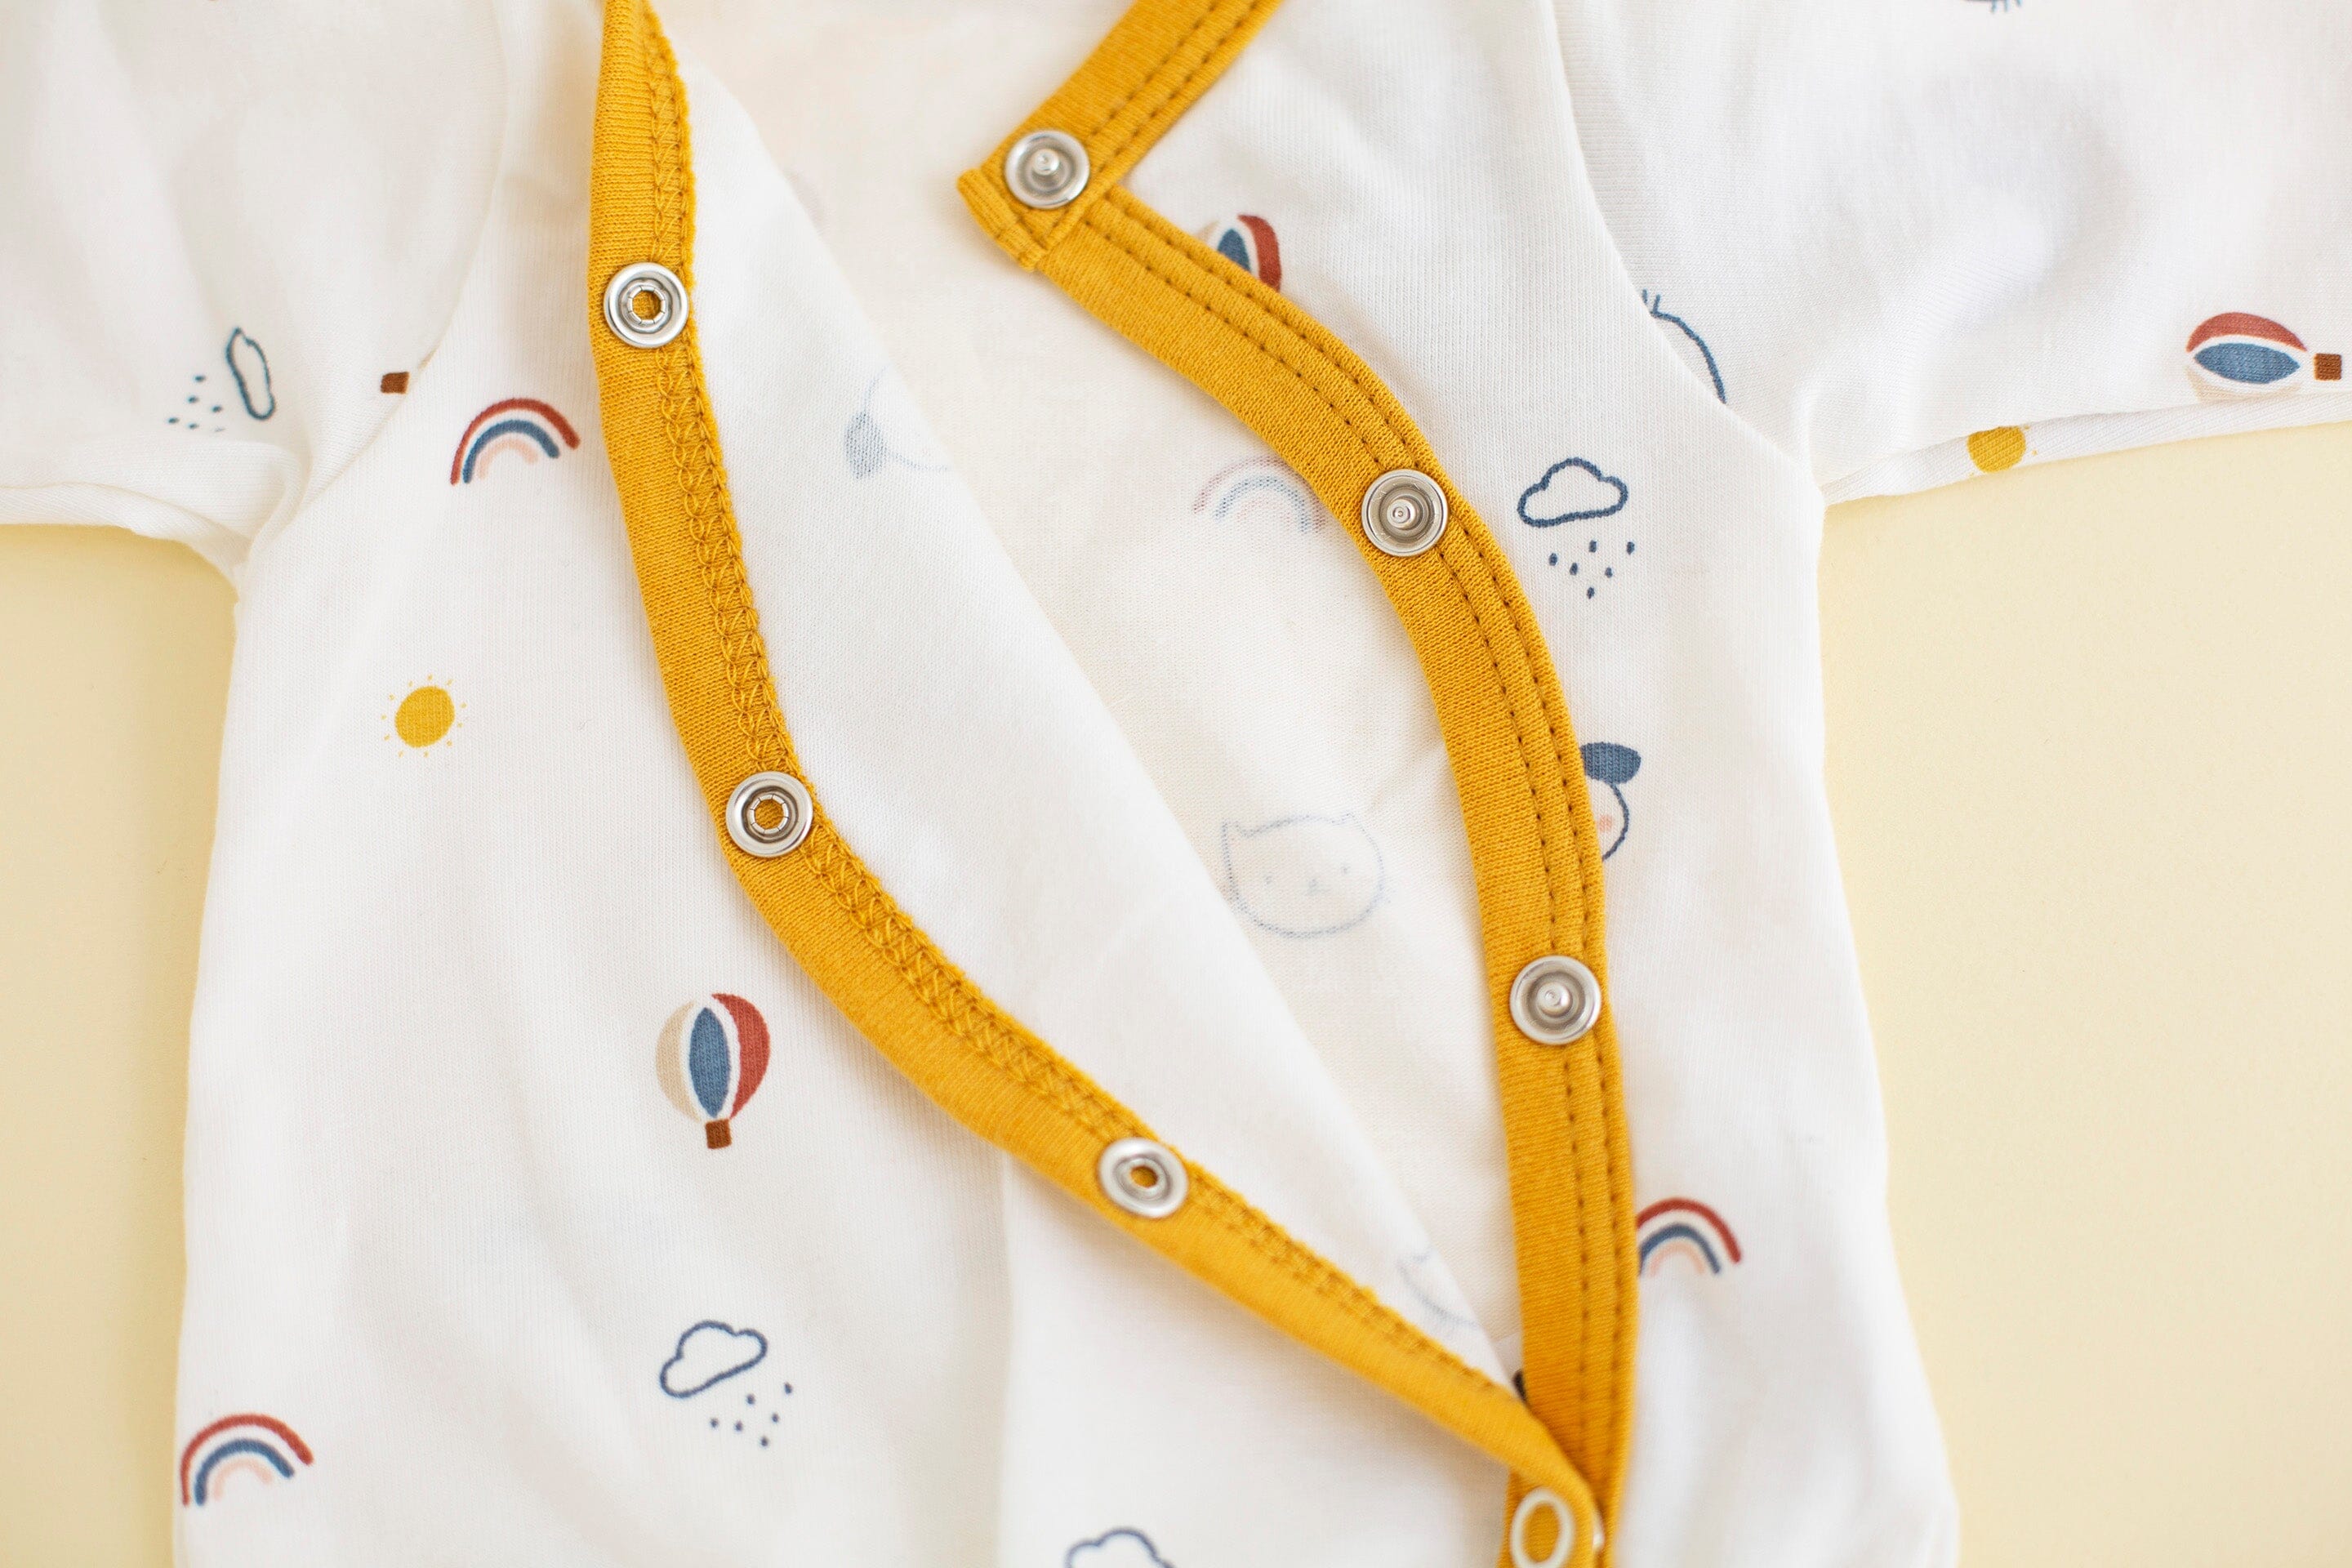 Prem Baby Sleepsuit, Pet Pals - Mustard Sleepsuit / Babygrow Tiny & Small 